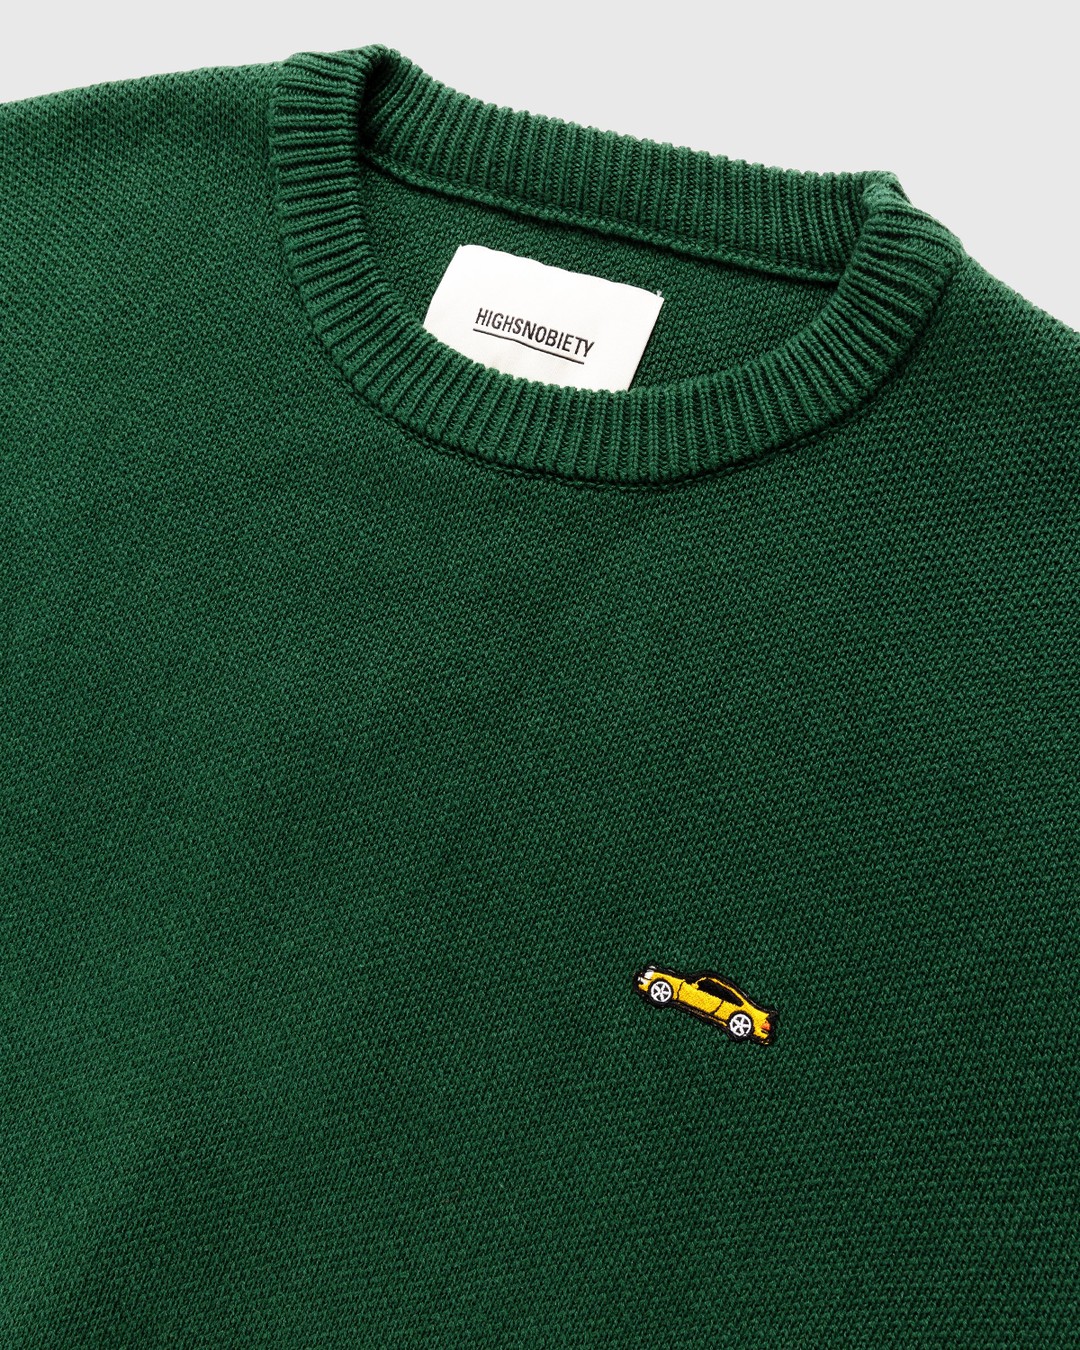 RUF x Highsnobiety – Knitted Crewneck Sweater Green - Knitwear - Green - Image 5